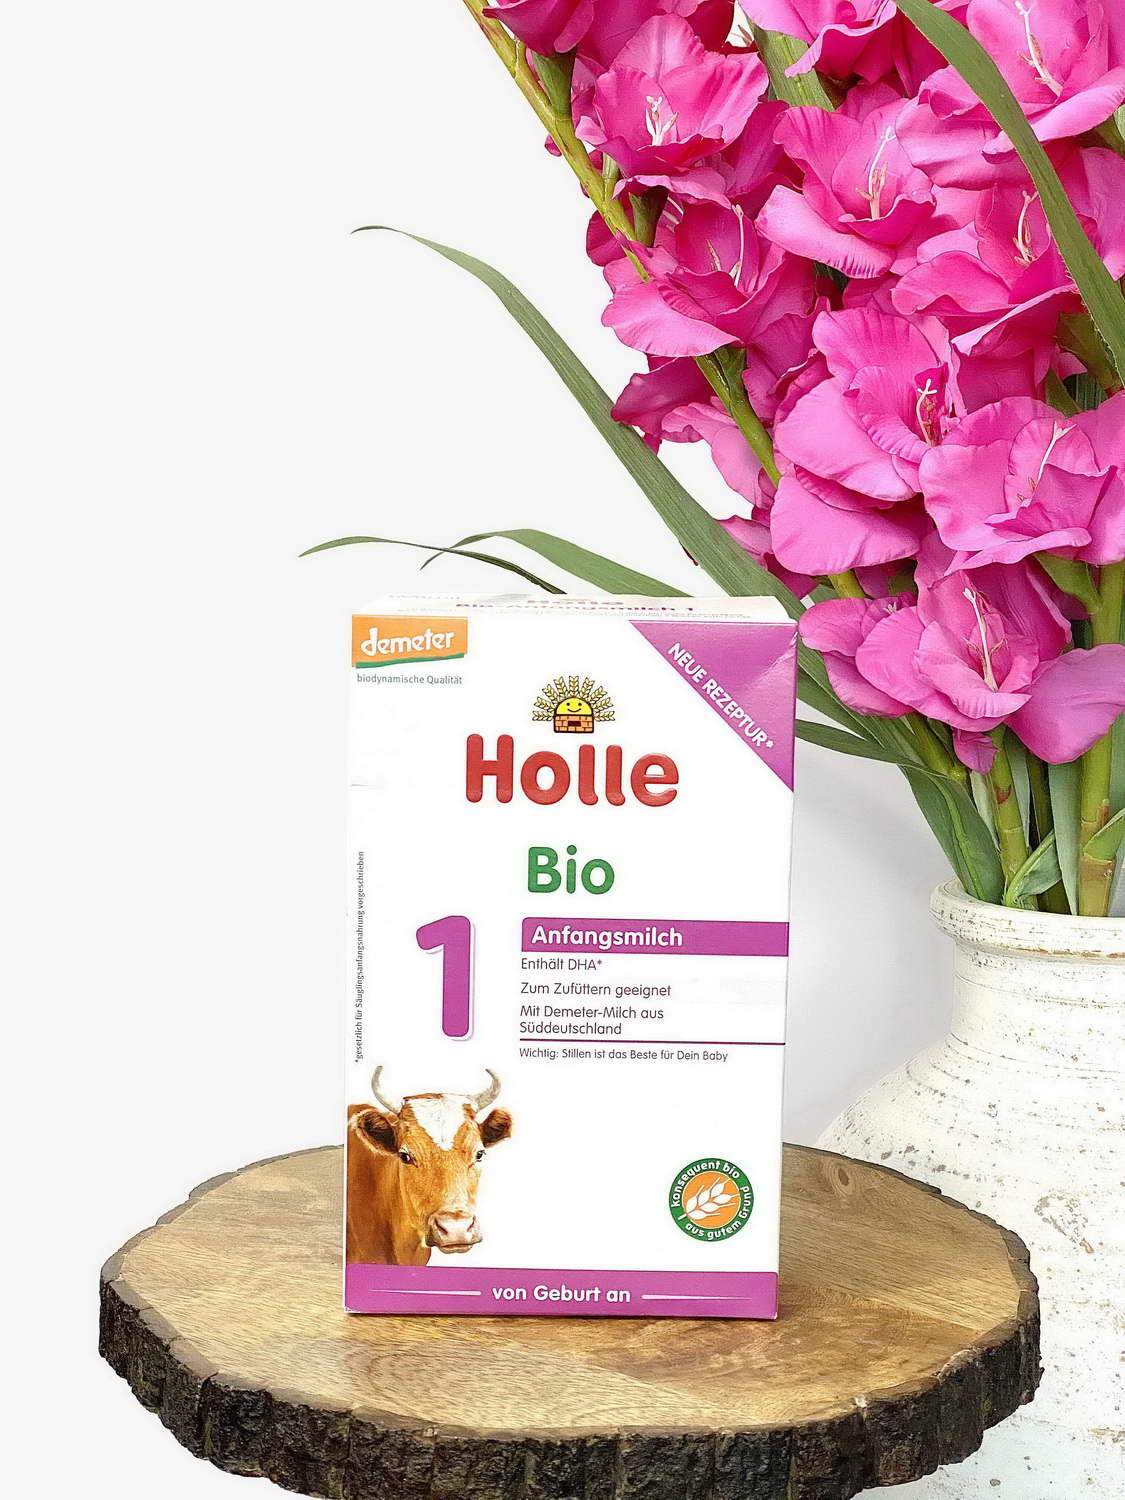 HiPP Dutch HA Hypoallergenic Stage 1  Bundle up & Save 30% on HiPP Formula  – Zen Organic Formula